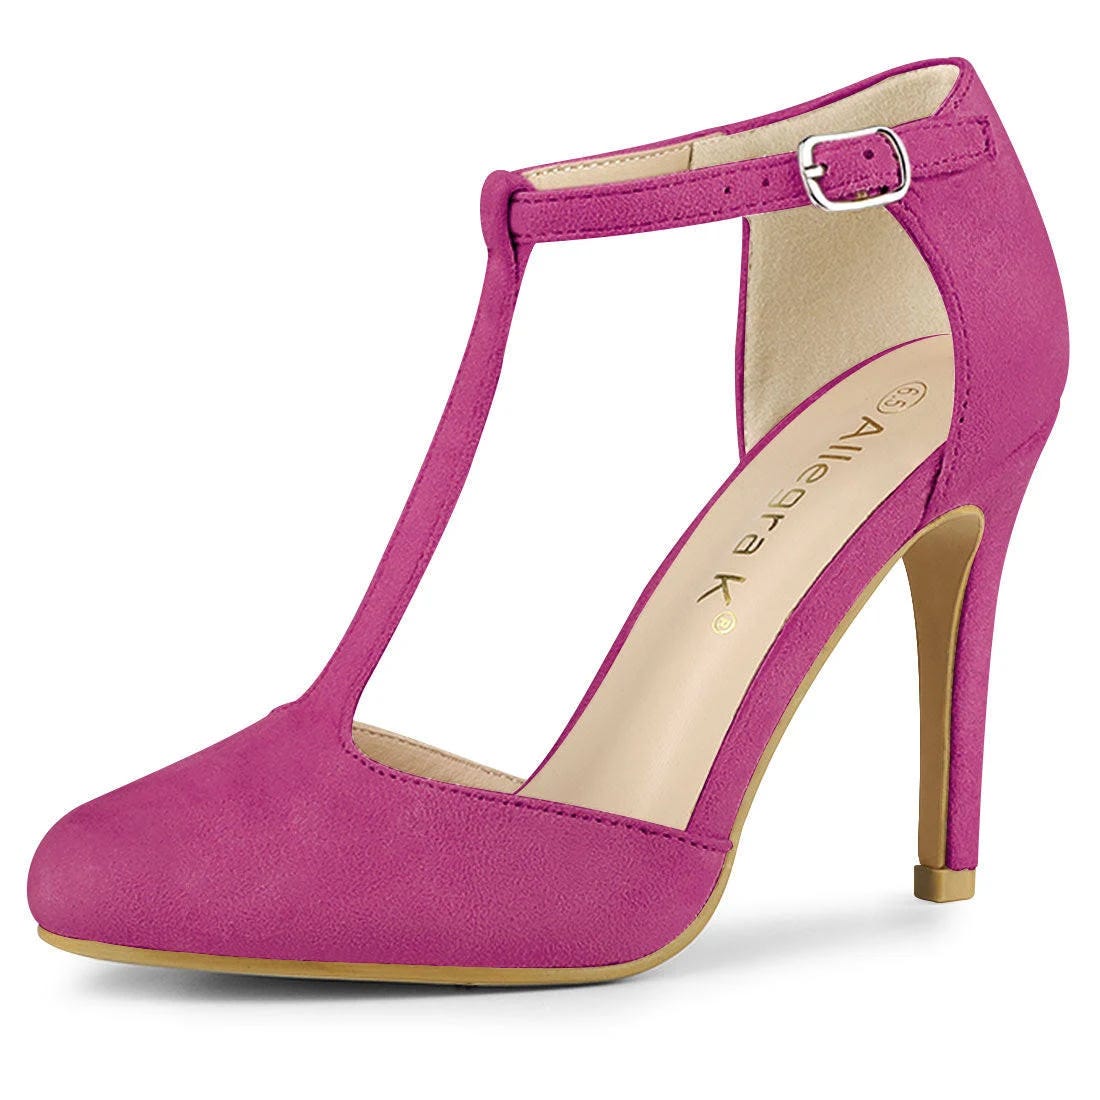 Hot Pink Stiletto Heel Pumps with T-Strap Design | Image